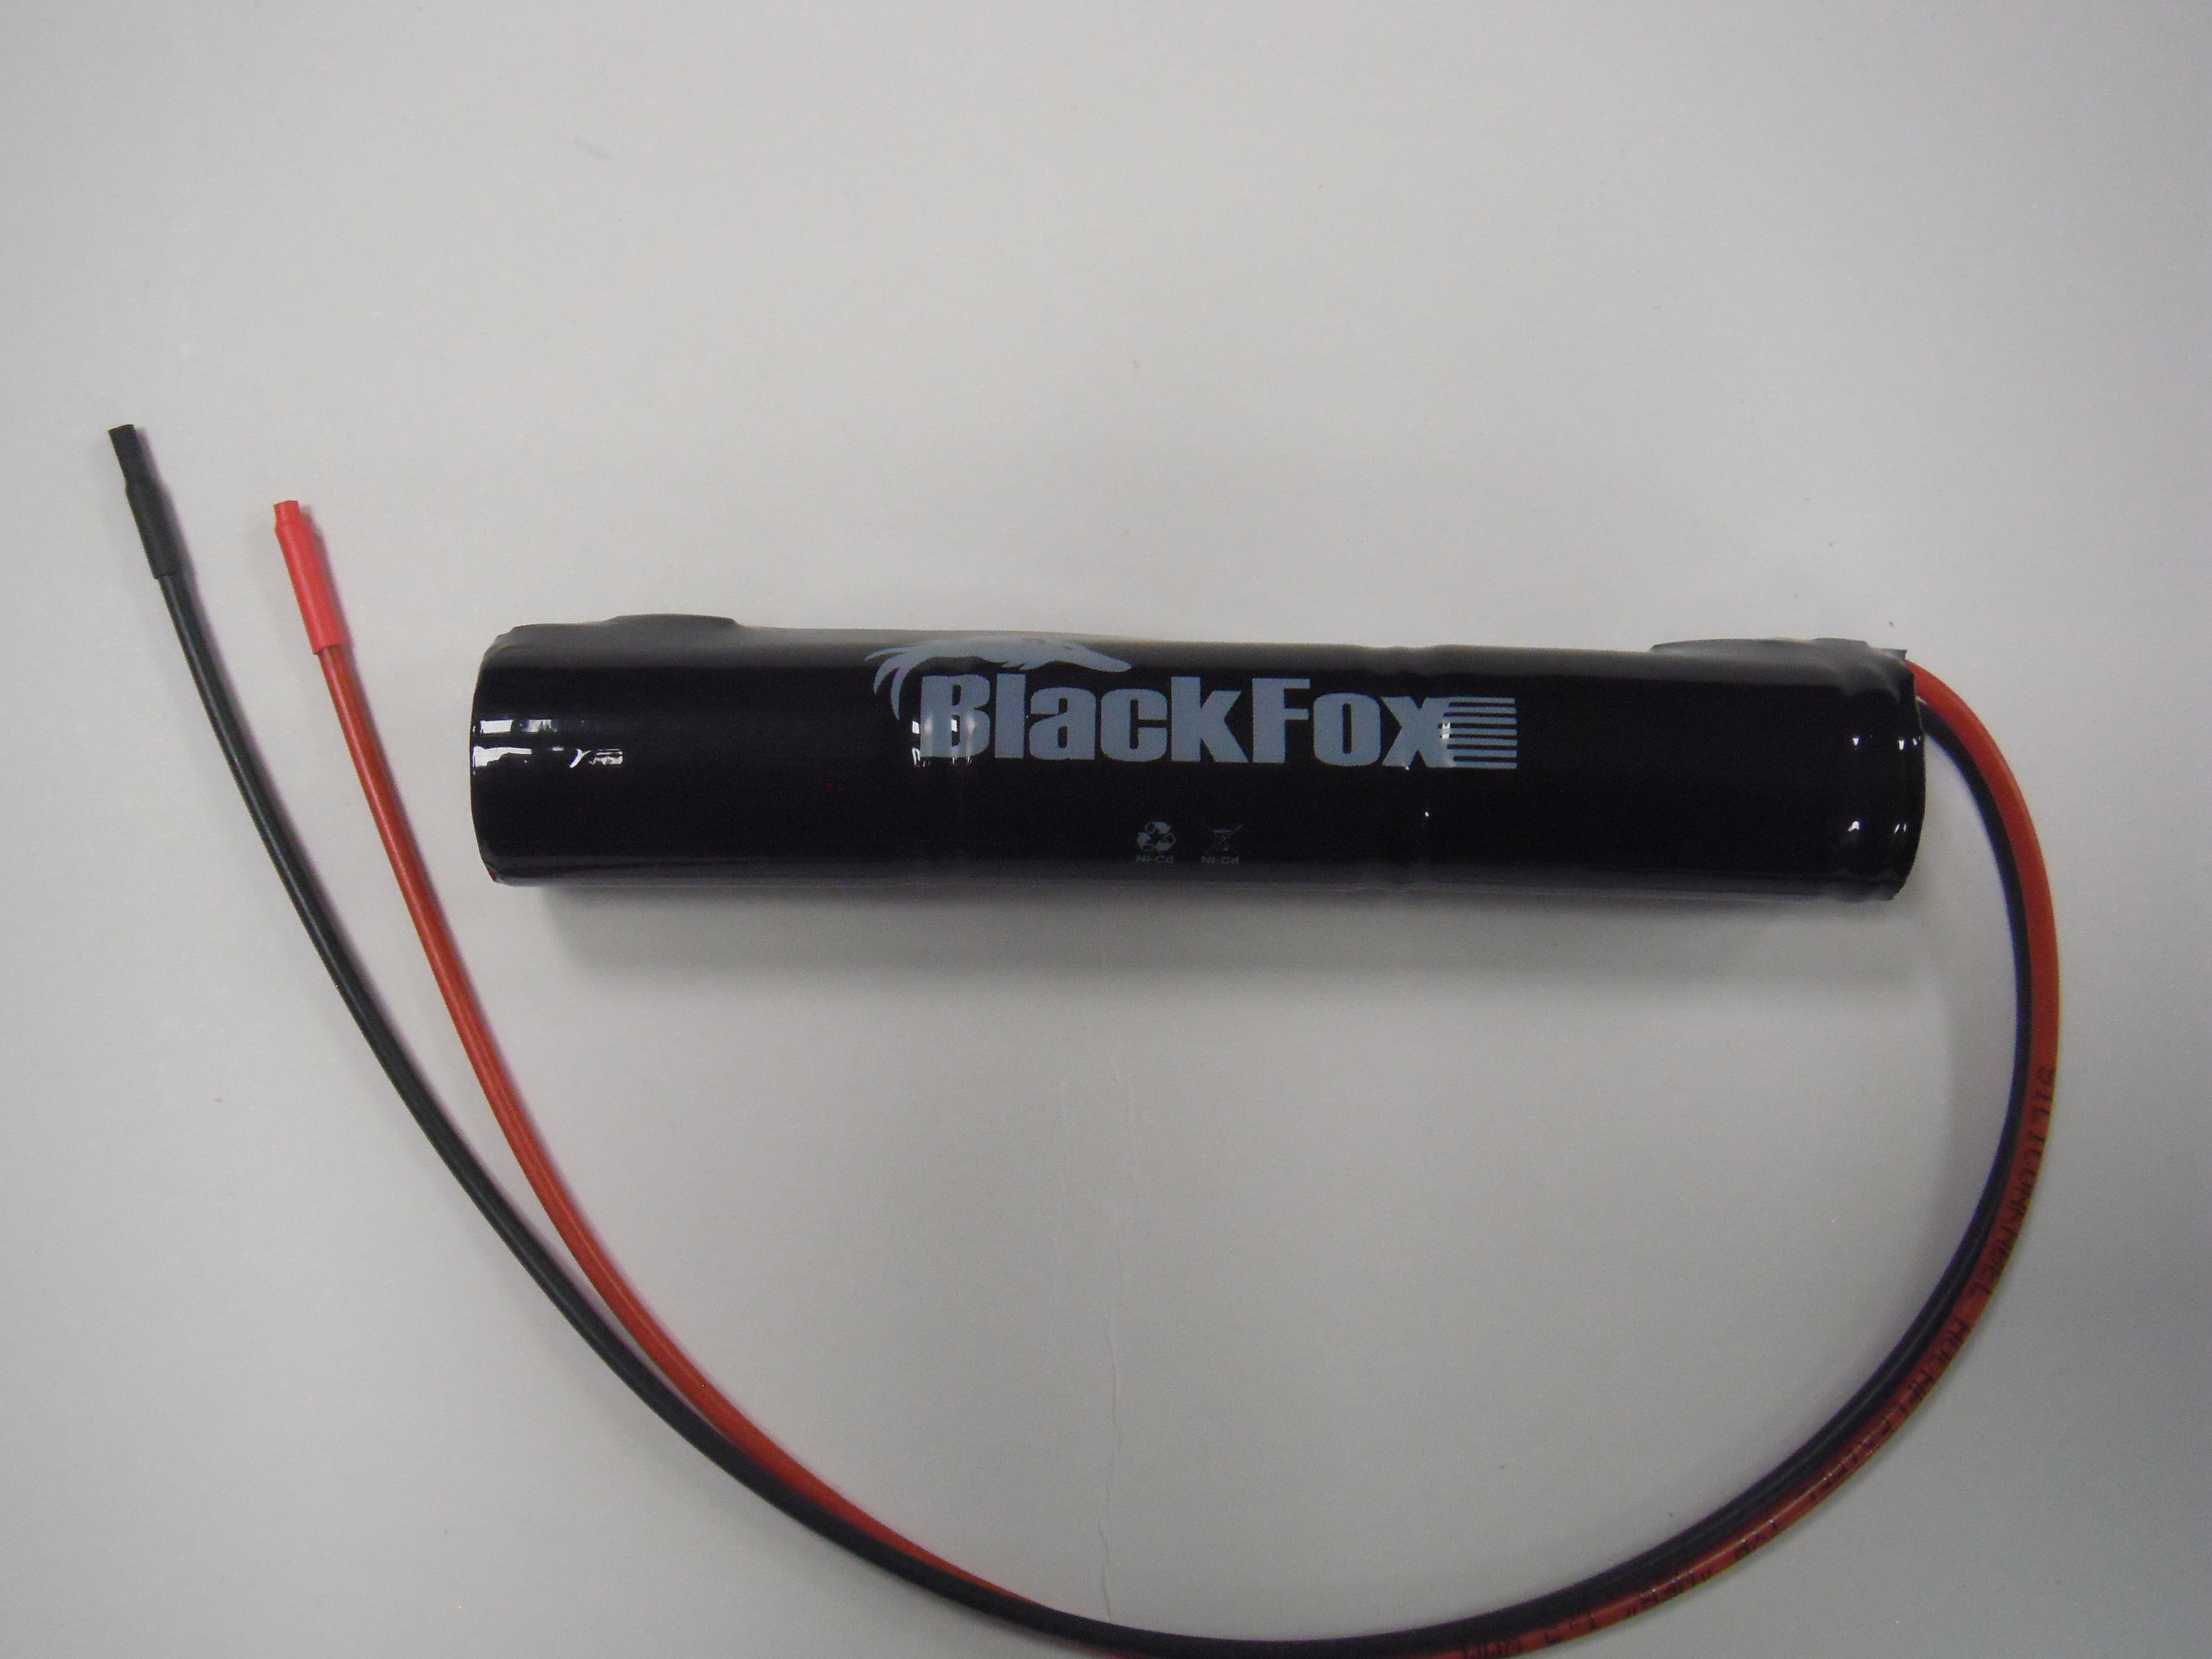 Notbeleuchtungs-Akku L1x3 Blackfox BF-1600SCHT mit Kabel 10cm mit offener Litze 3,6V, 1600mAh